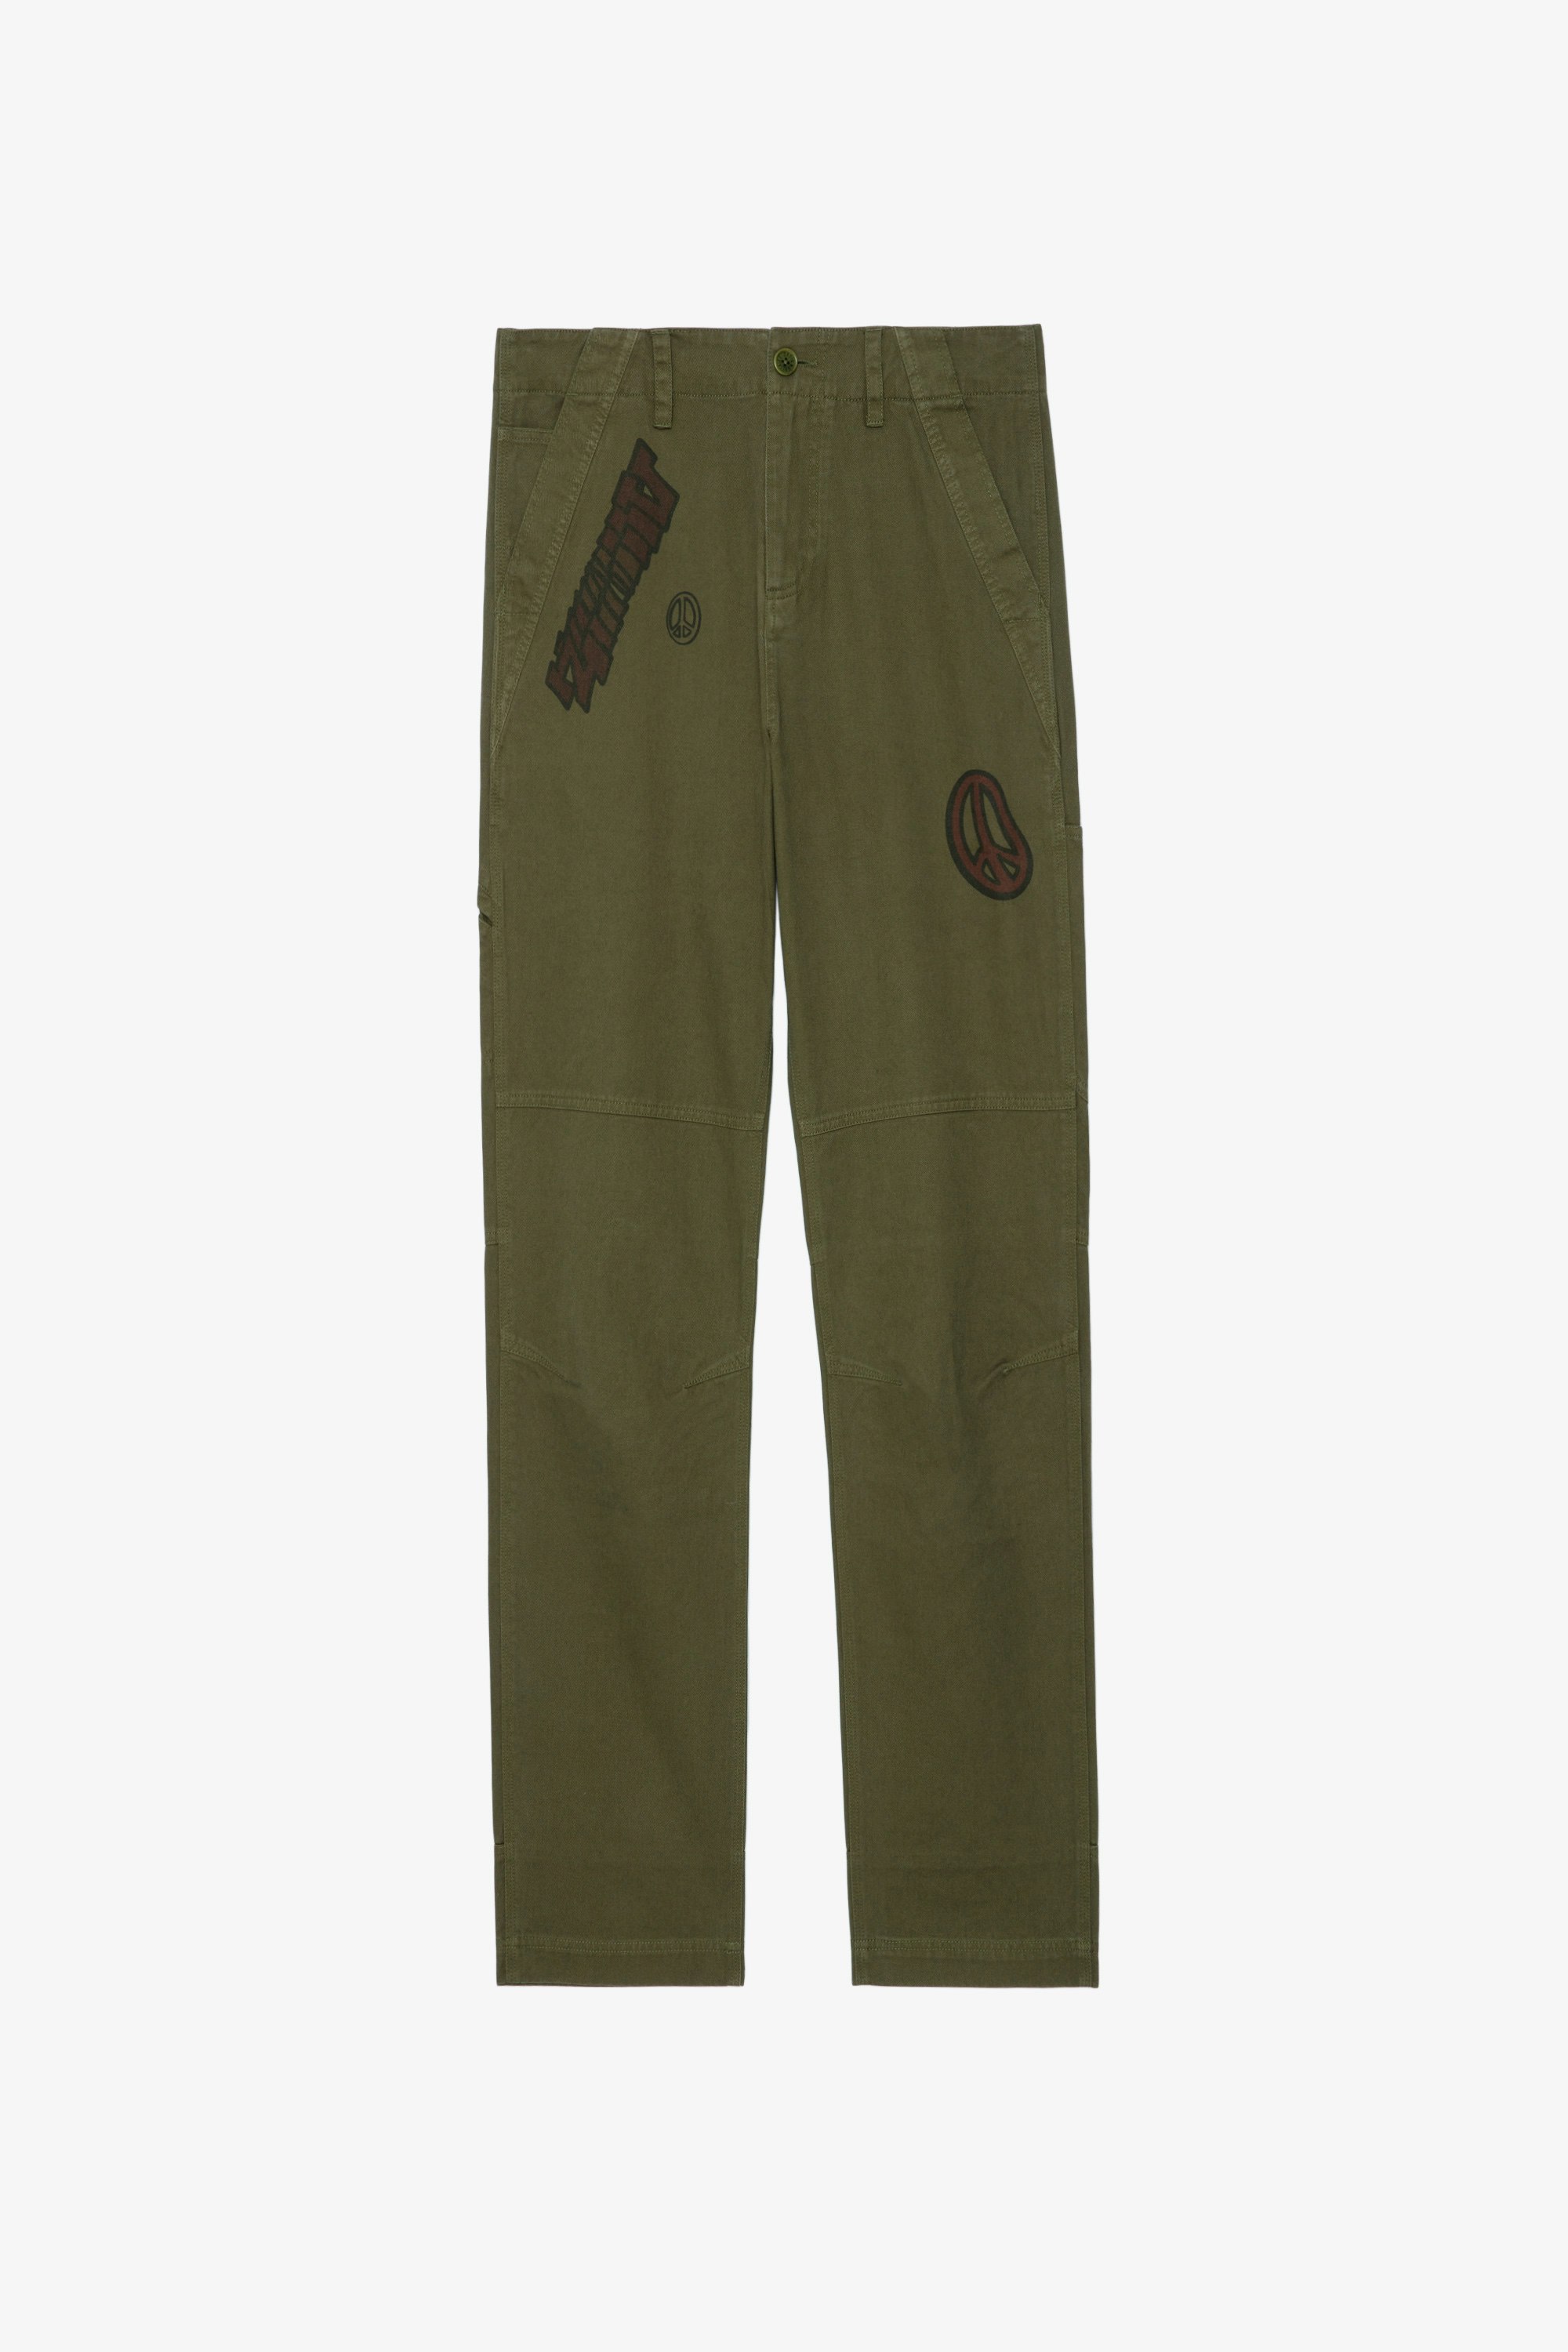 Park パンツ Men’s khaki cotton military-style pants